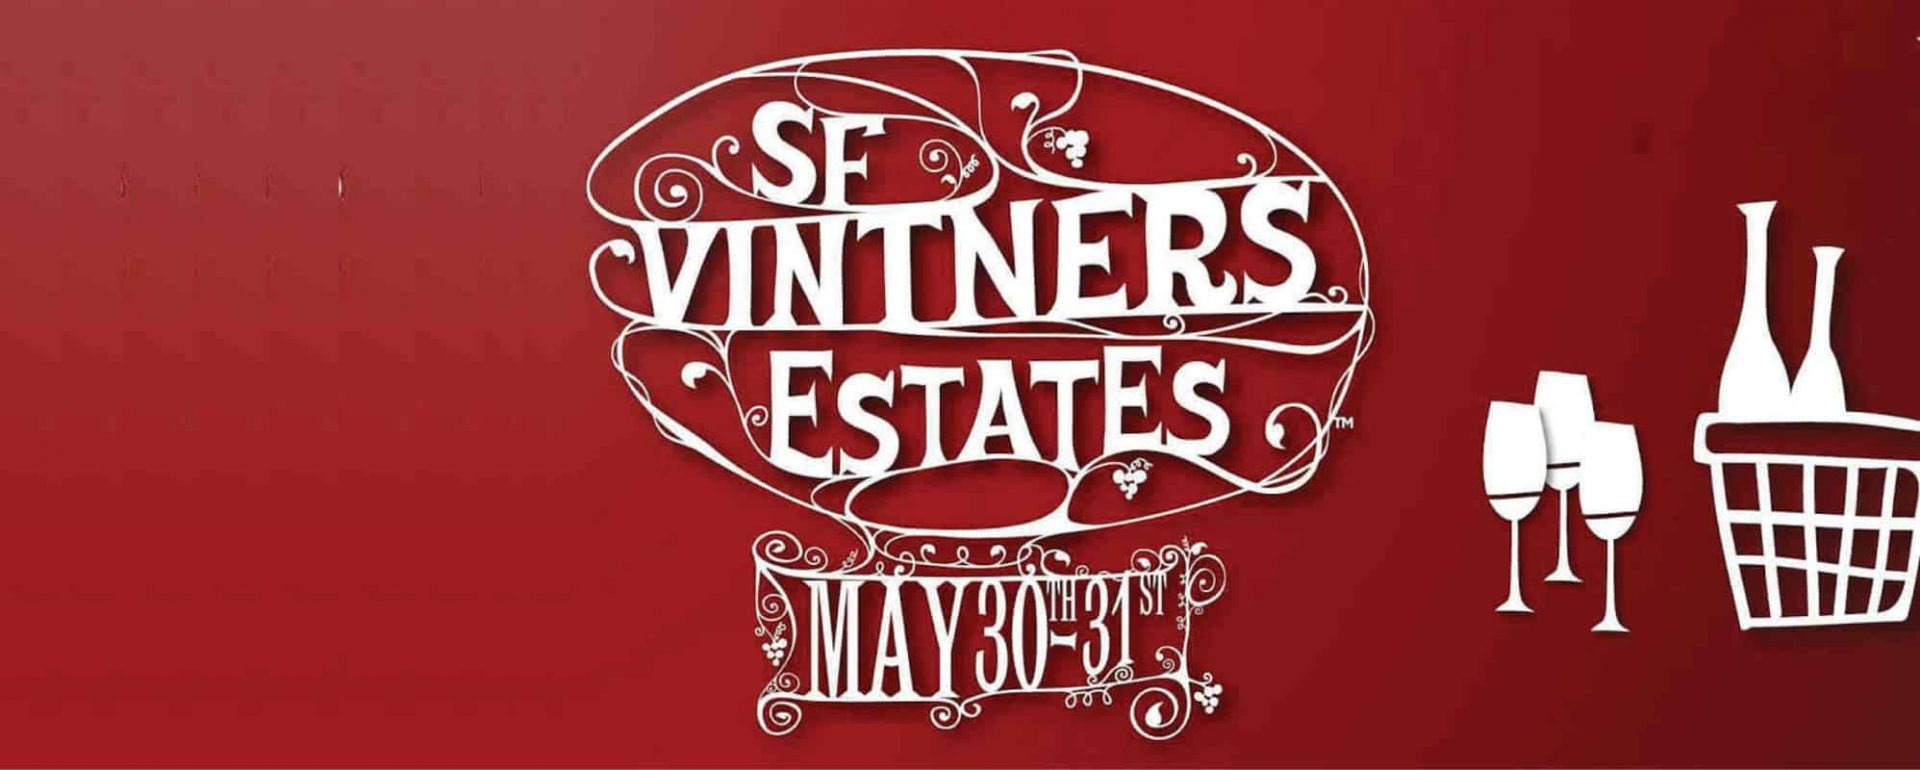 SF Vintners Estates Wine Tasting Event